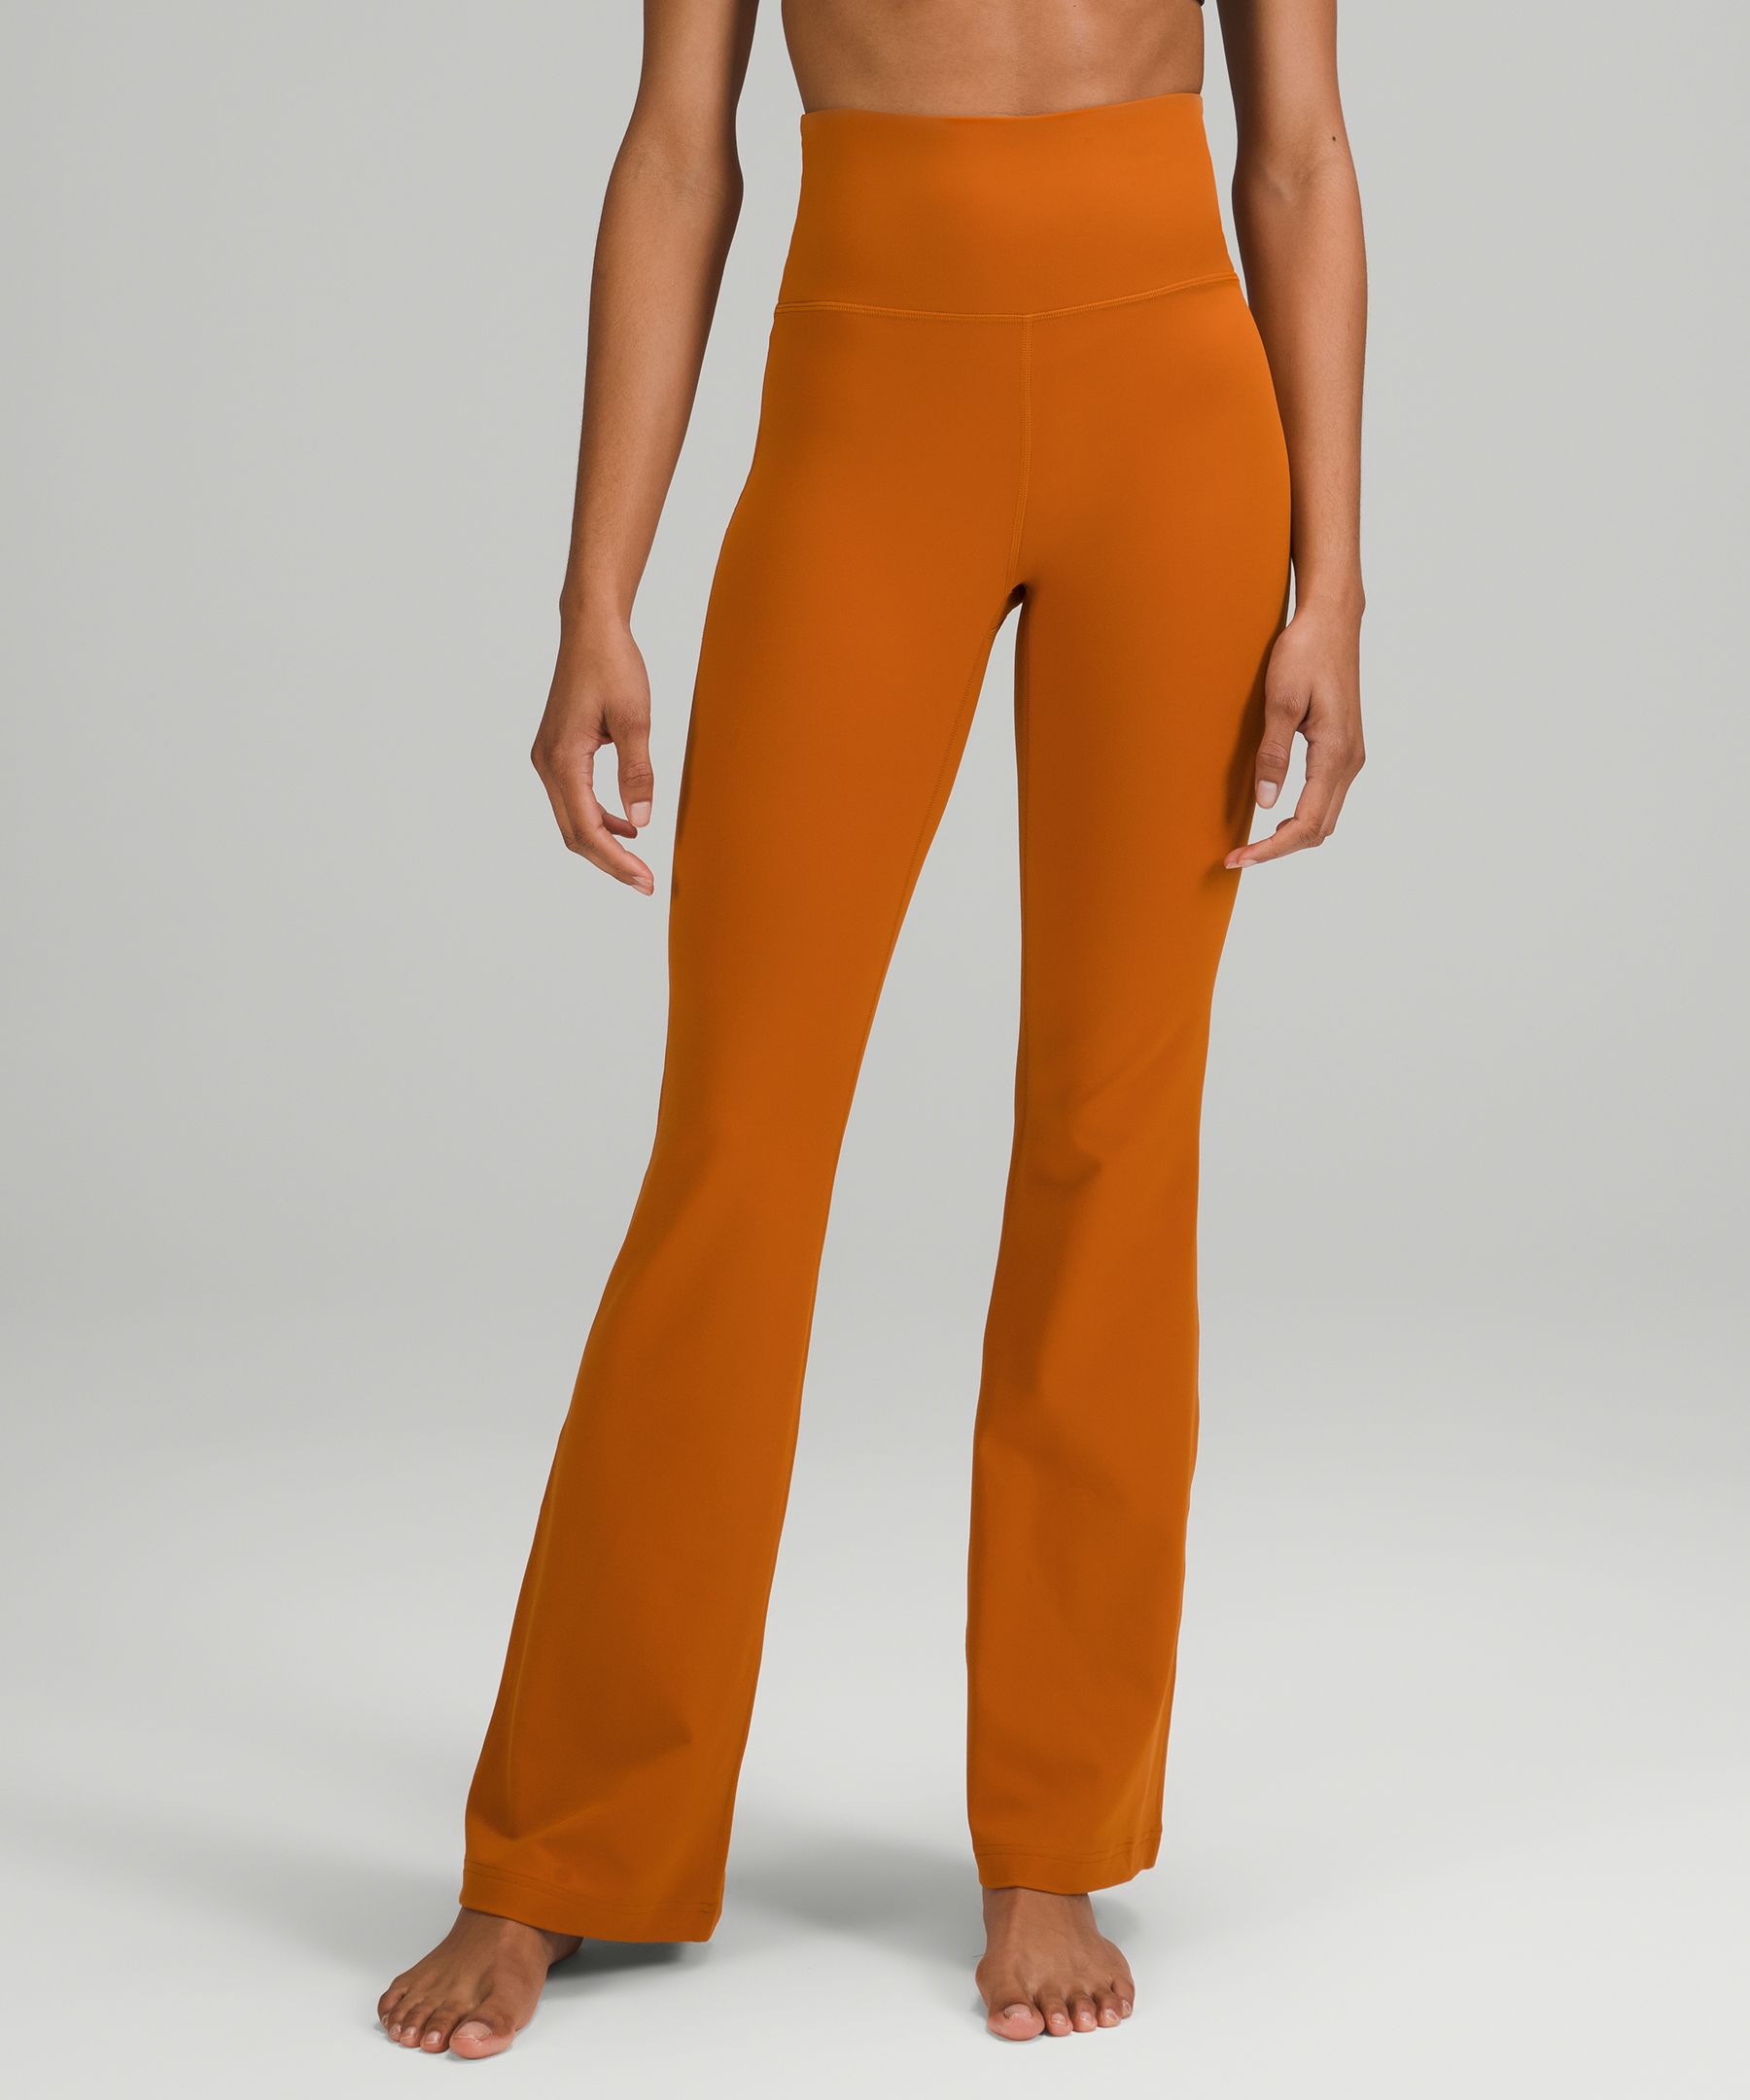 Lululemon Groove Super-high-rise Flared Pants Nulu In Roasted Orange